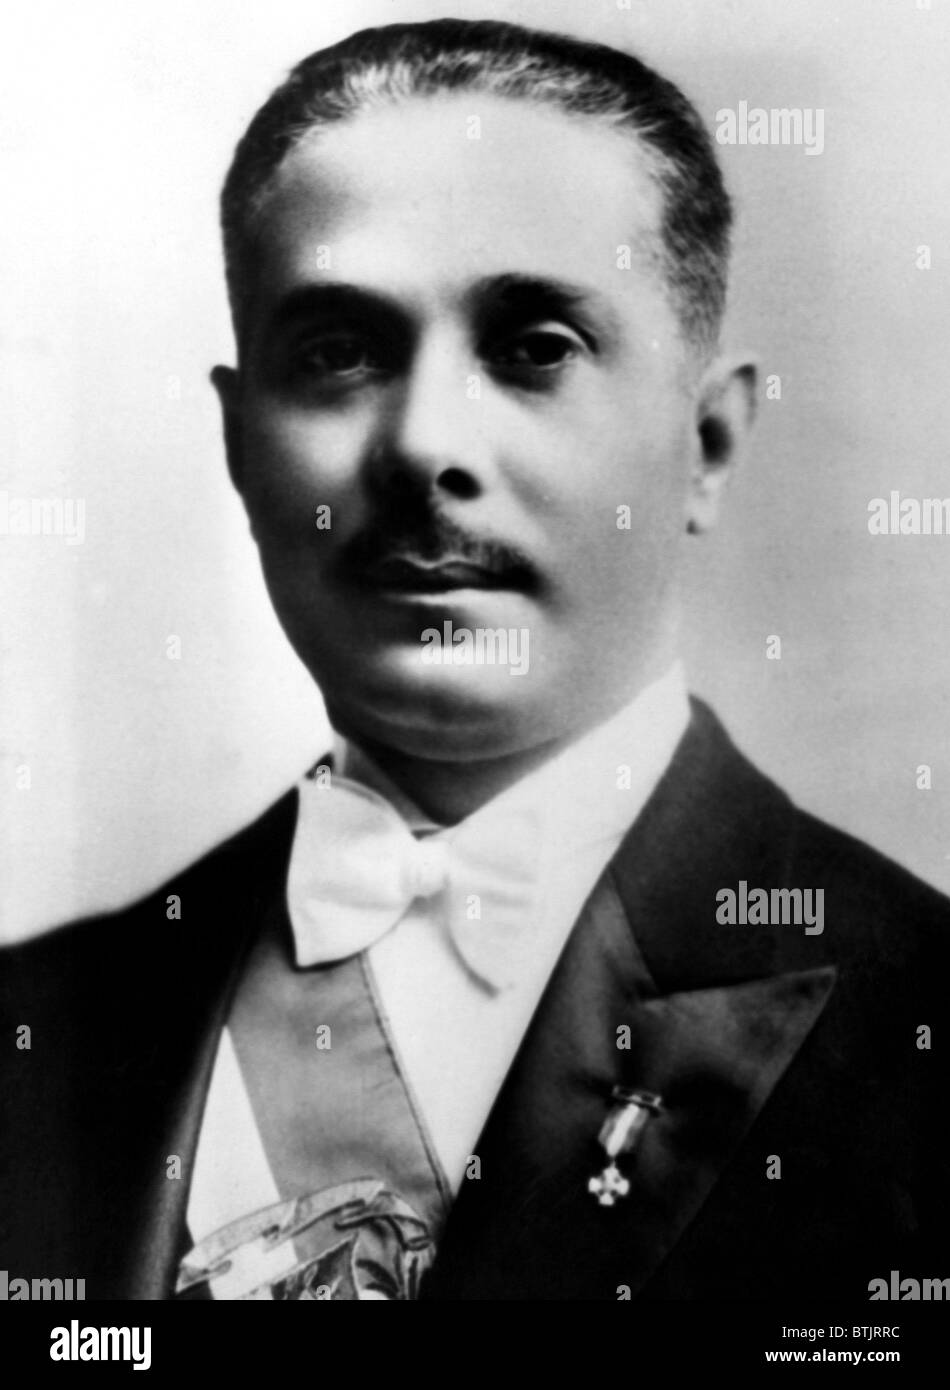 General Rafael Leonidas Trujillo, (1891-1961), dictator and former President of the Dominican Republic, 1939. Stock Photo